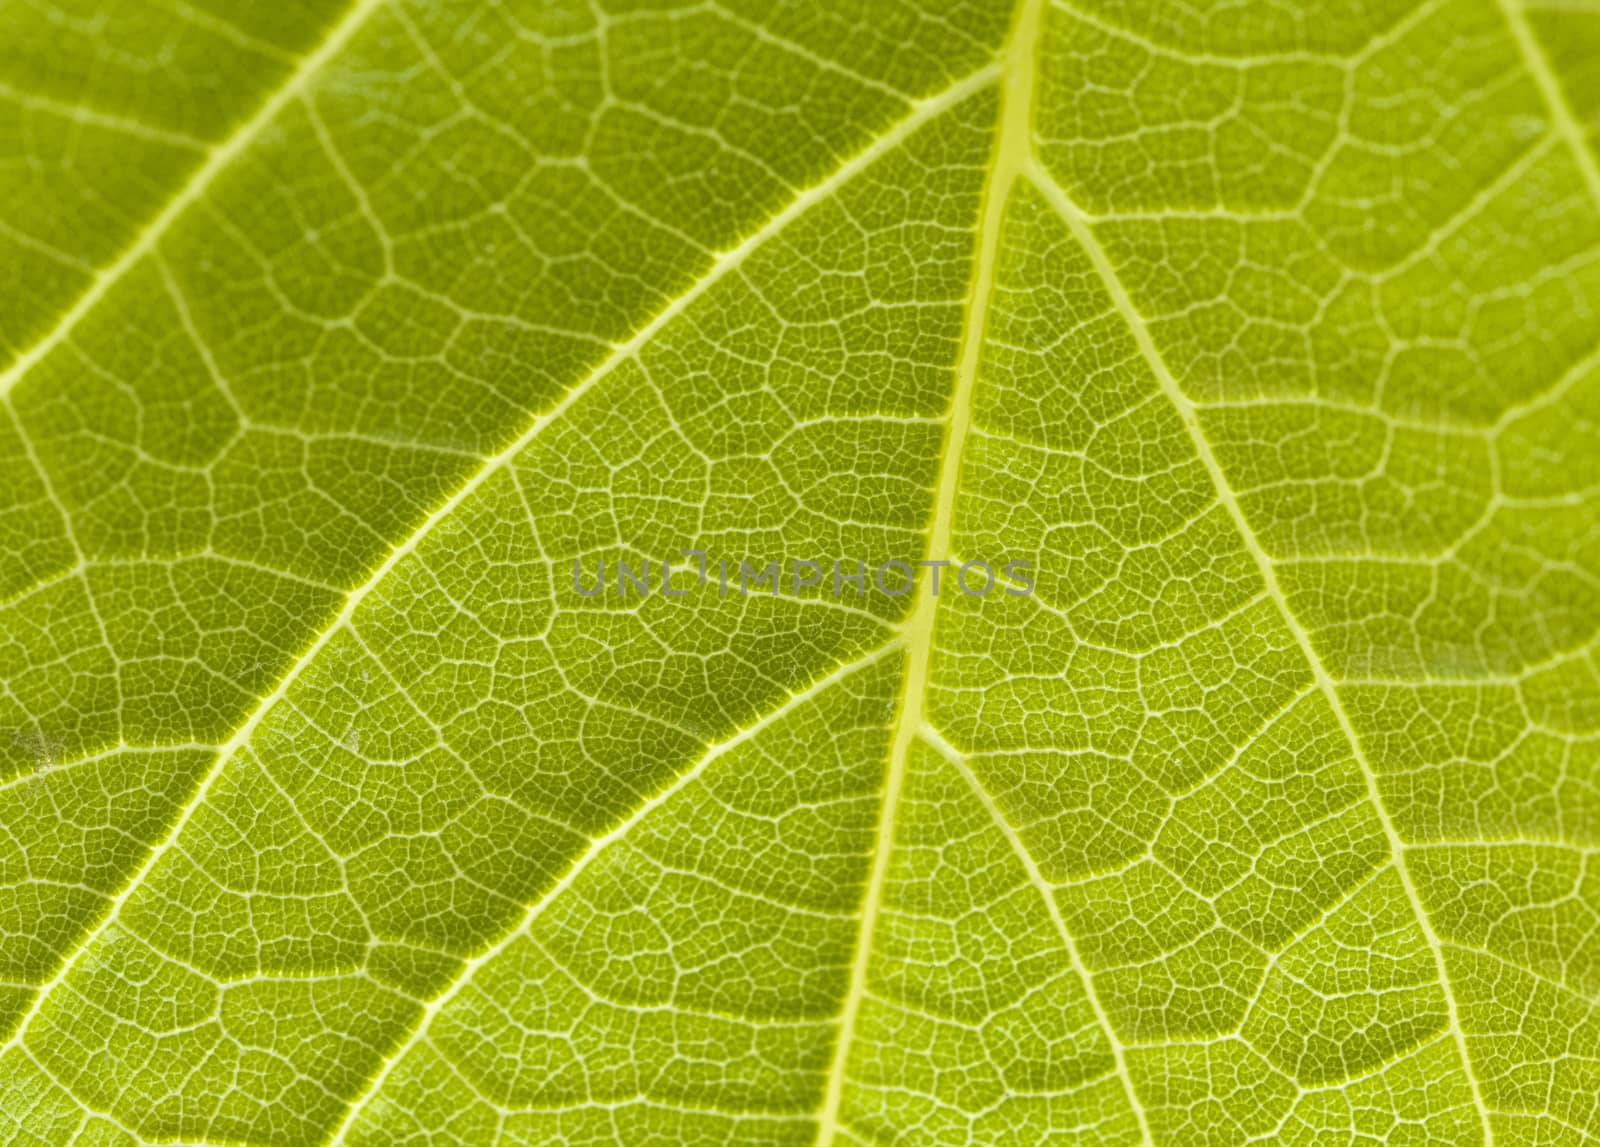 Leaf close-up by Njean